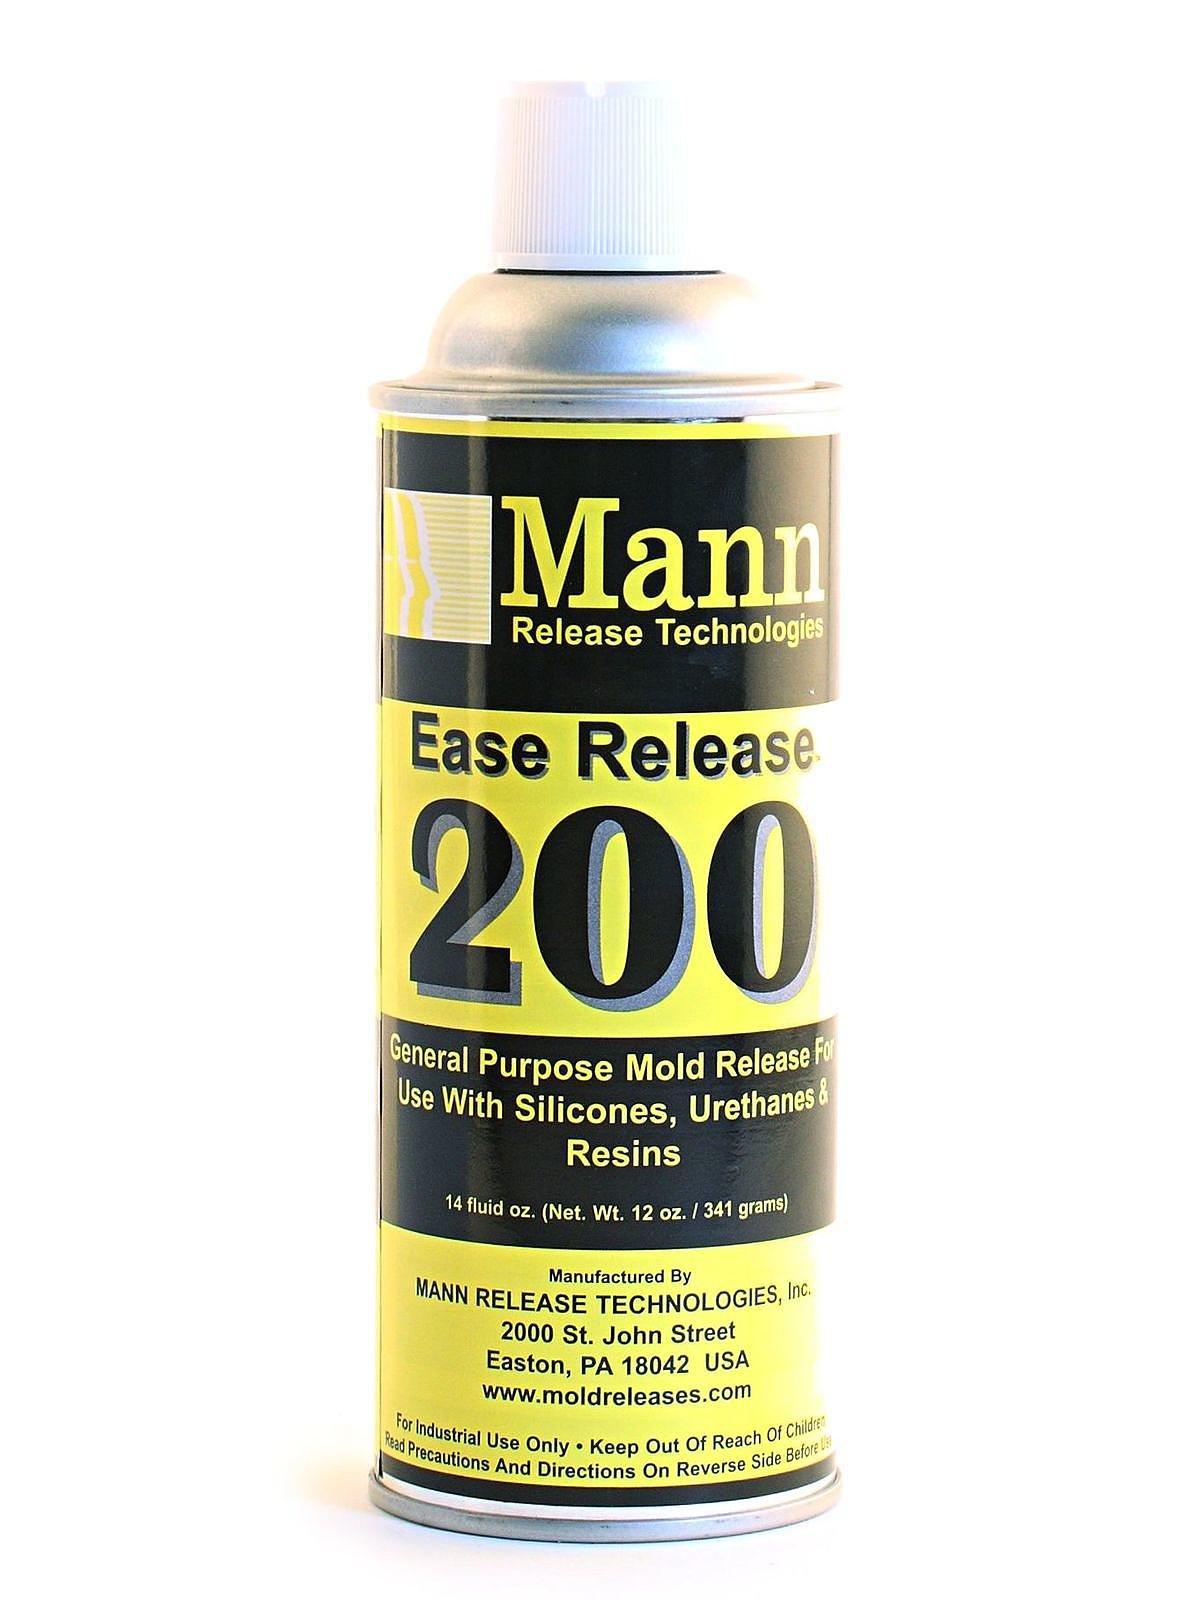 Mann Release Technologies - Ease Release 200